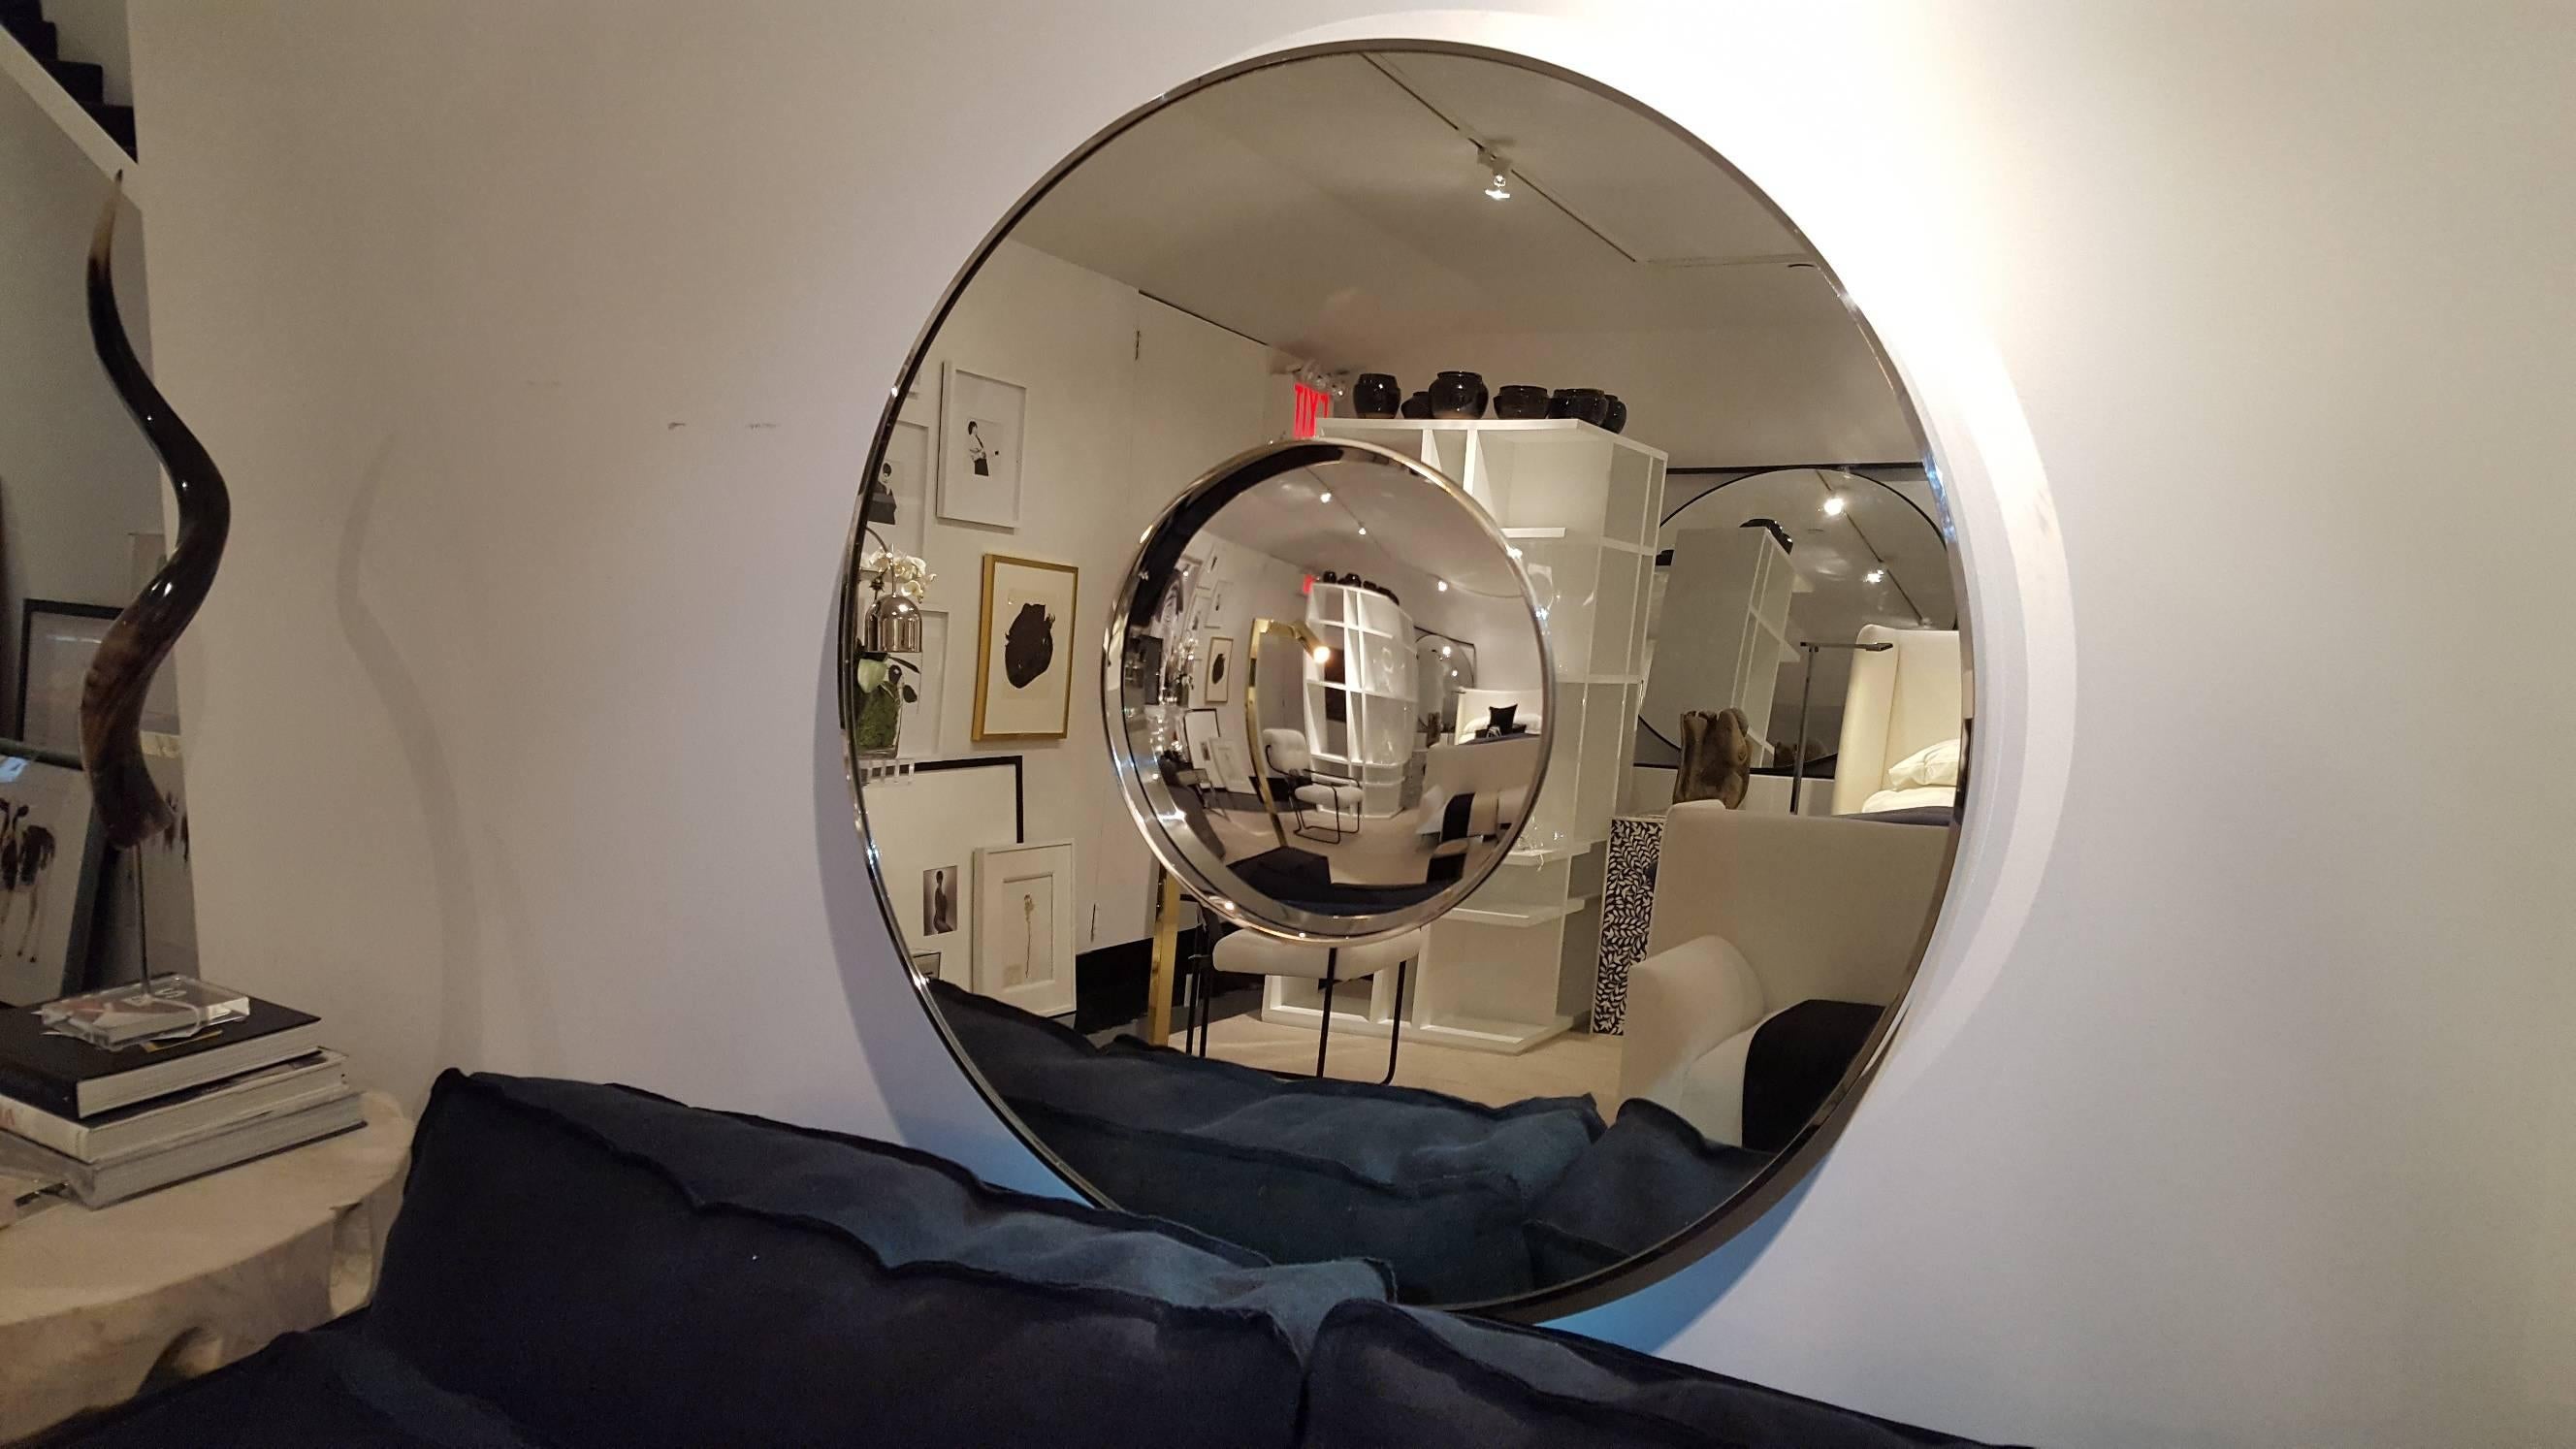 Gorgeous Mid-Century Modern bull's-eye wall mirror
Dimensions: 35